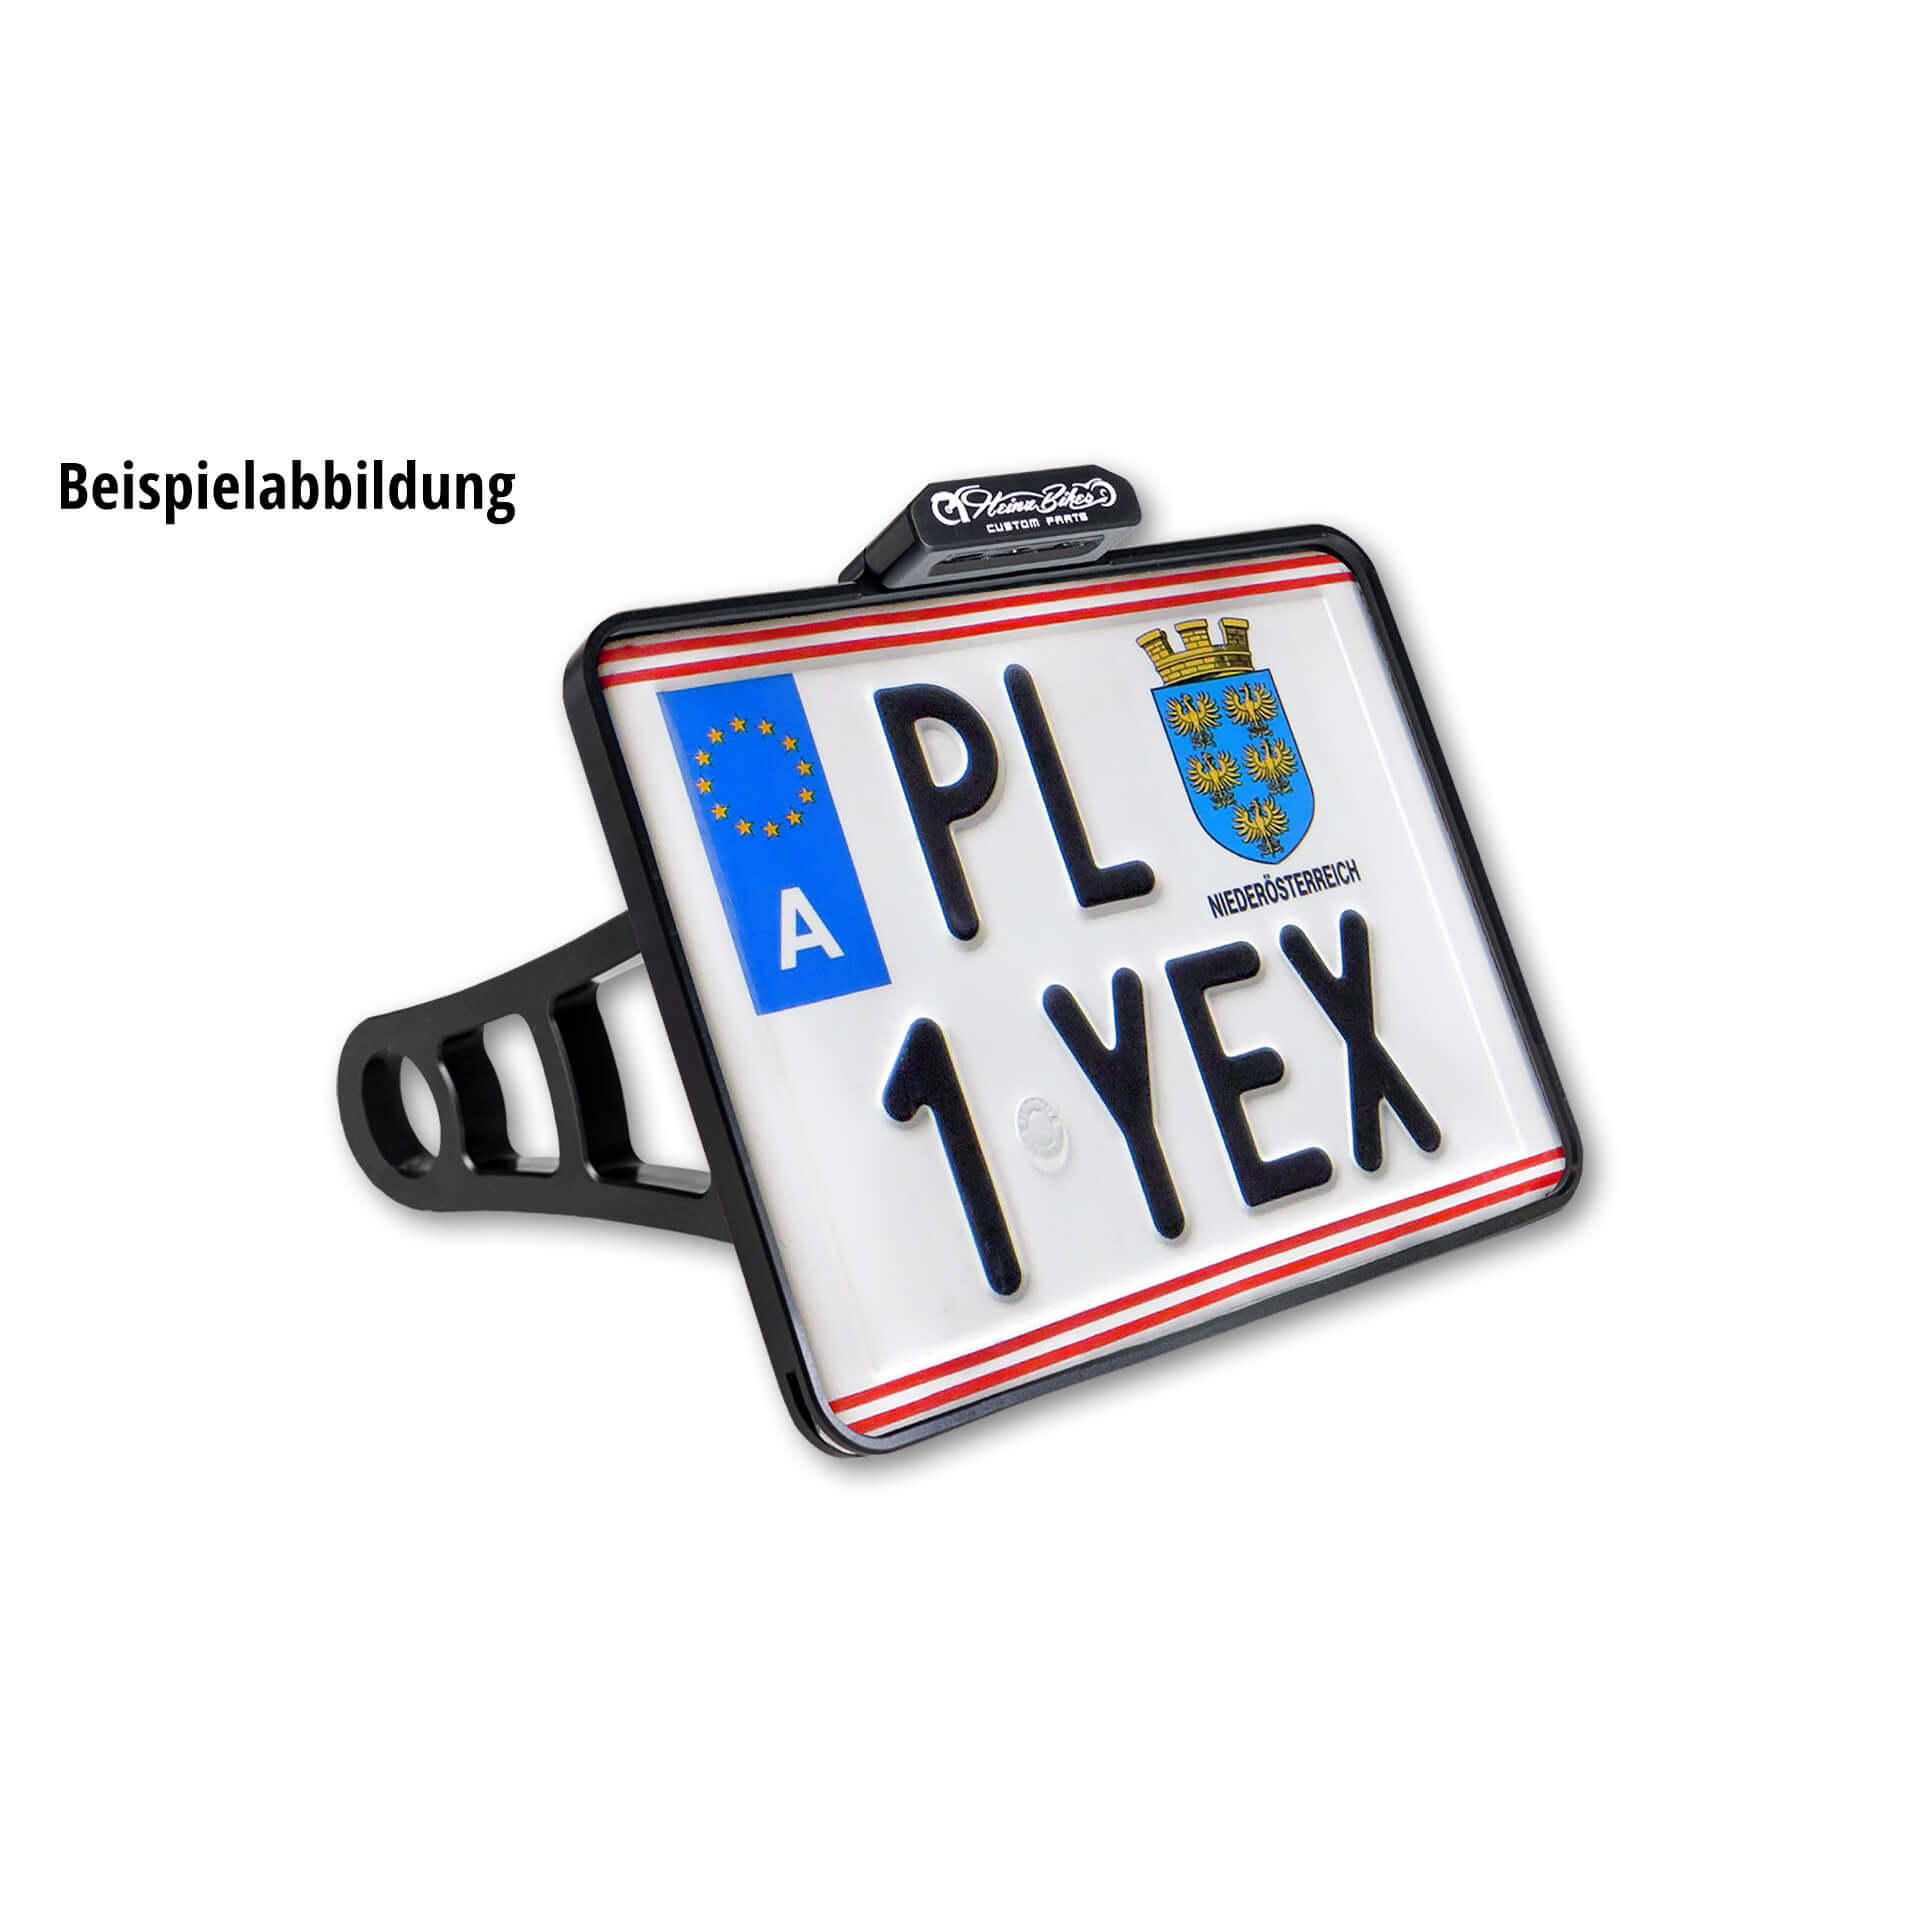 heinzbikes Side Mount license plate holder, Sportster until 2019, A, incl. LED license plate illumination